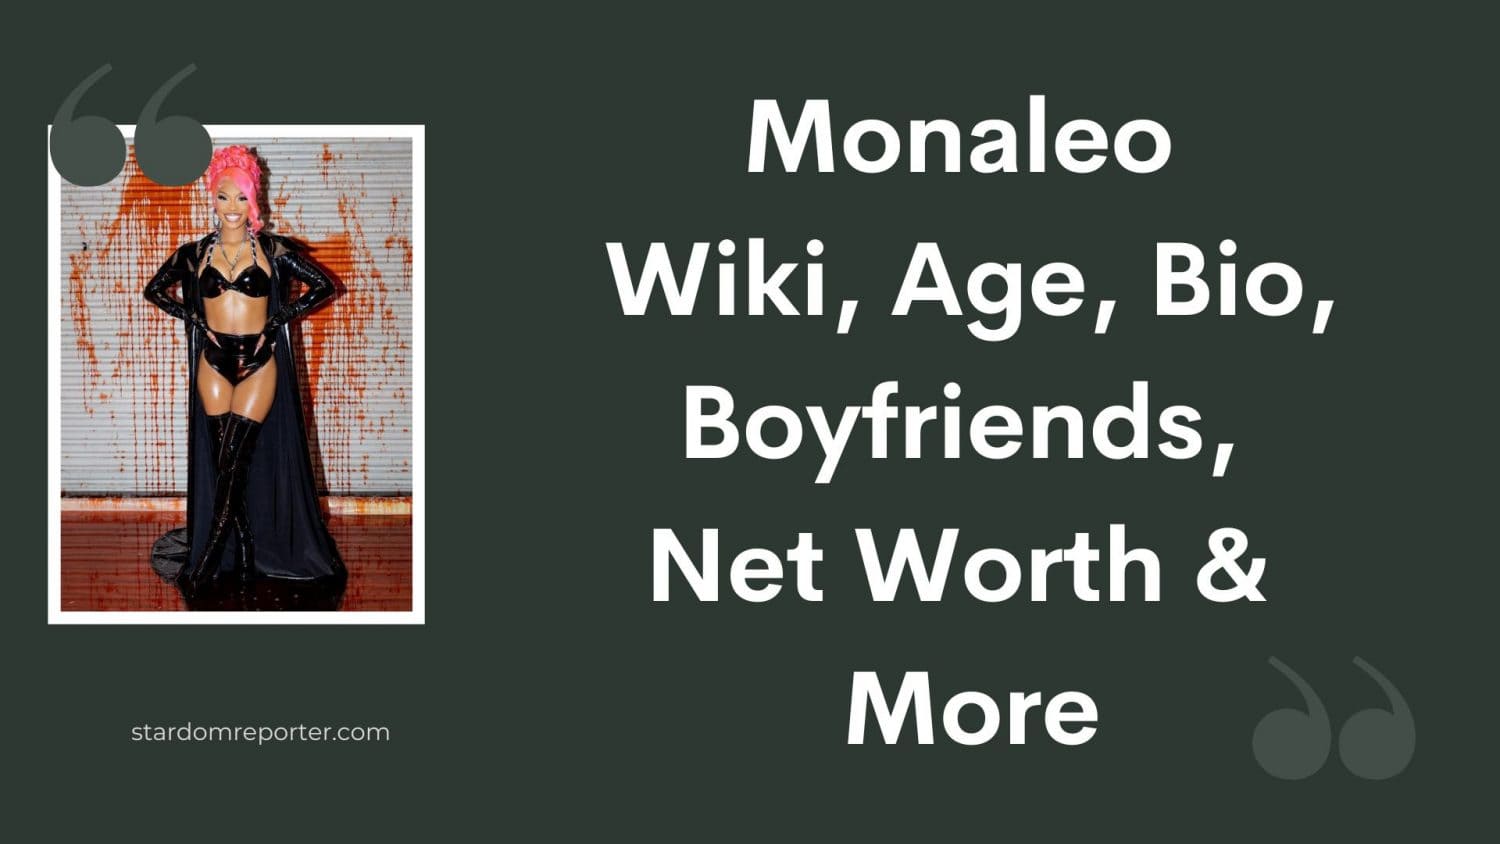 Monaleo Wiki, Age, Bio, Boyfriends, Net Worth & More - 41